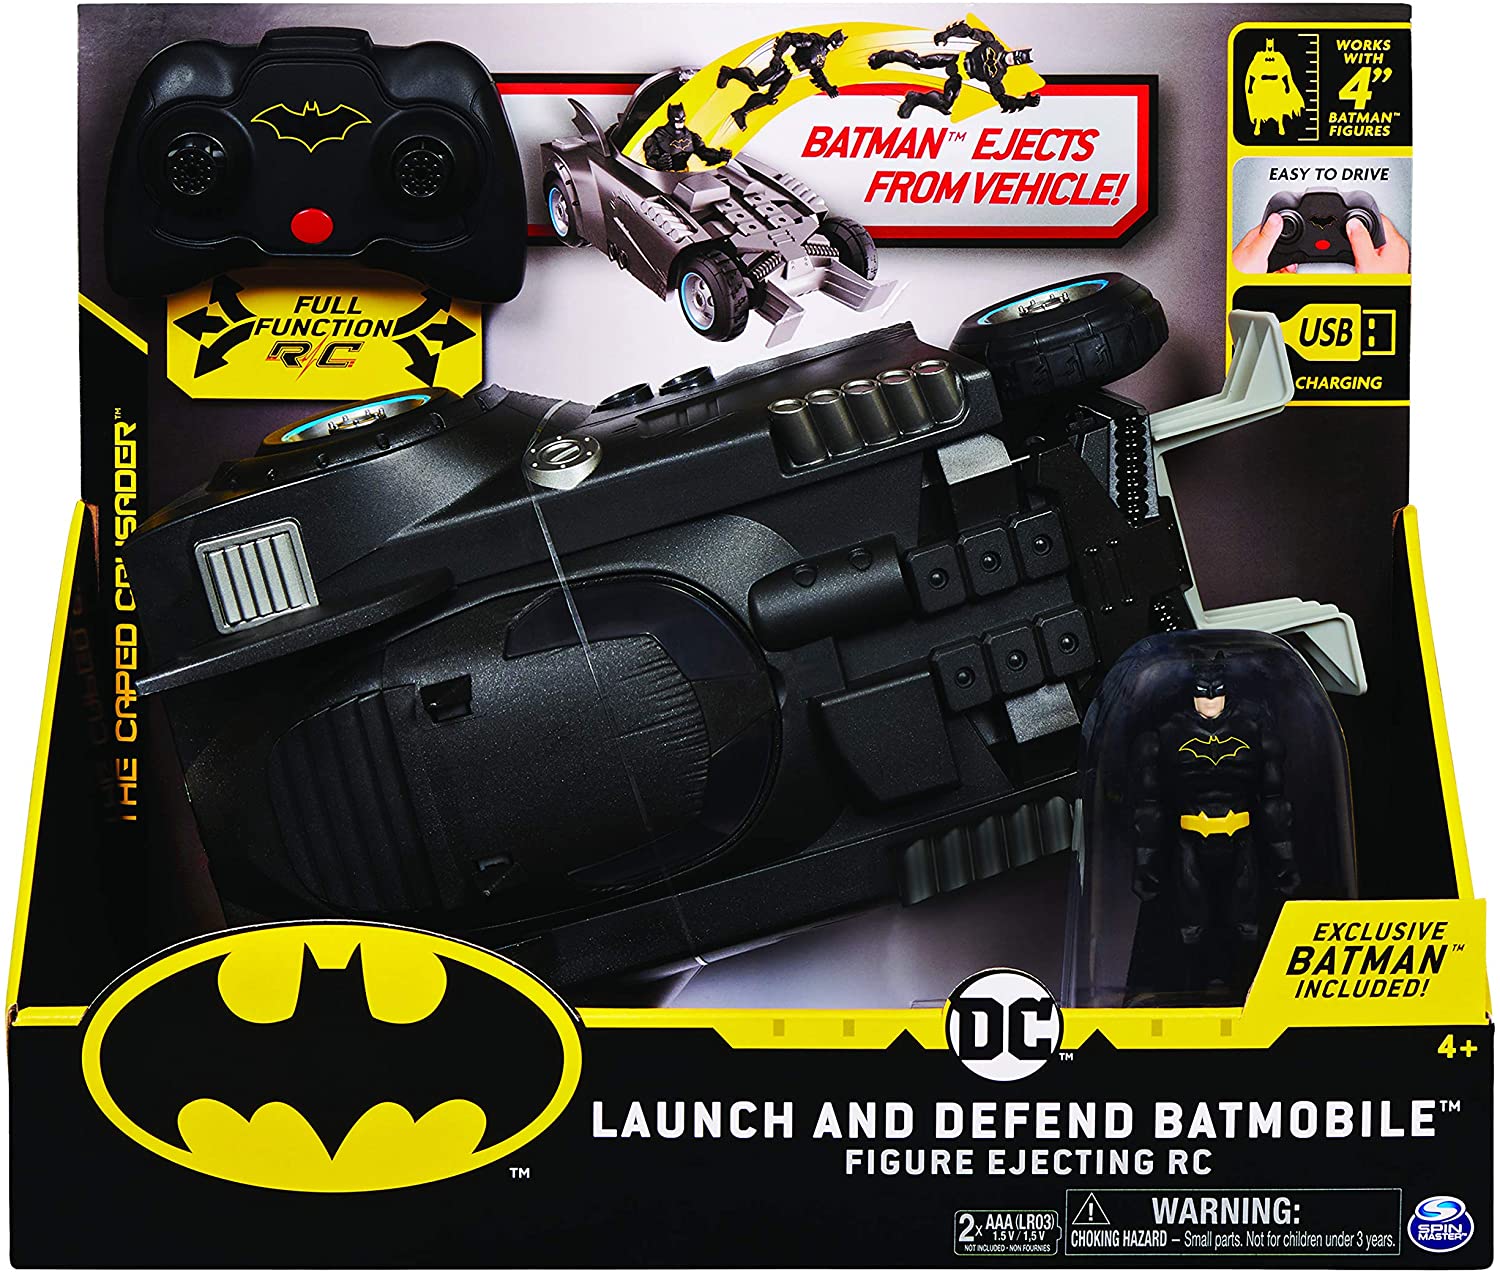 Remote controlled RC Batmobile Batman - Batman Toy